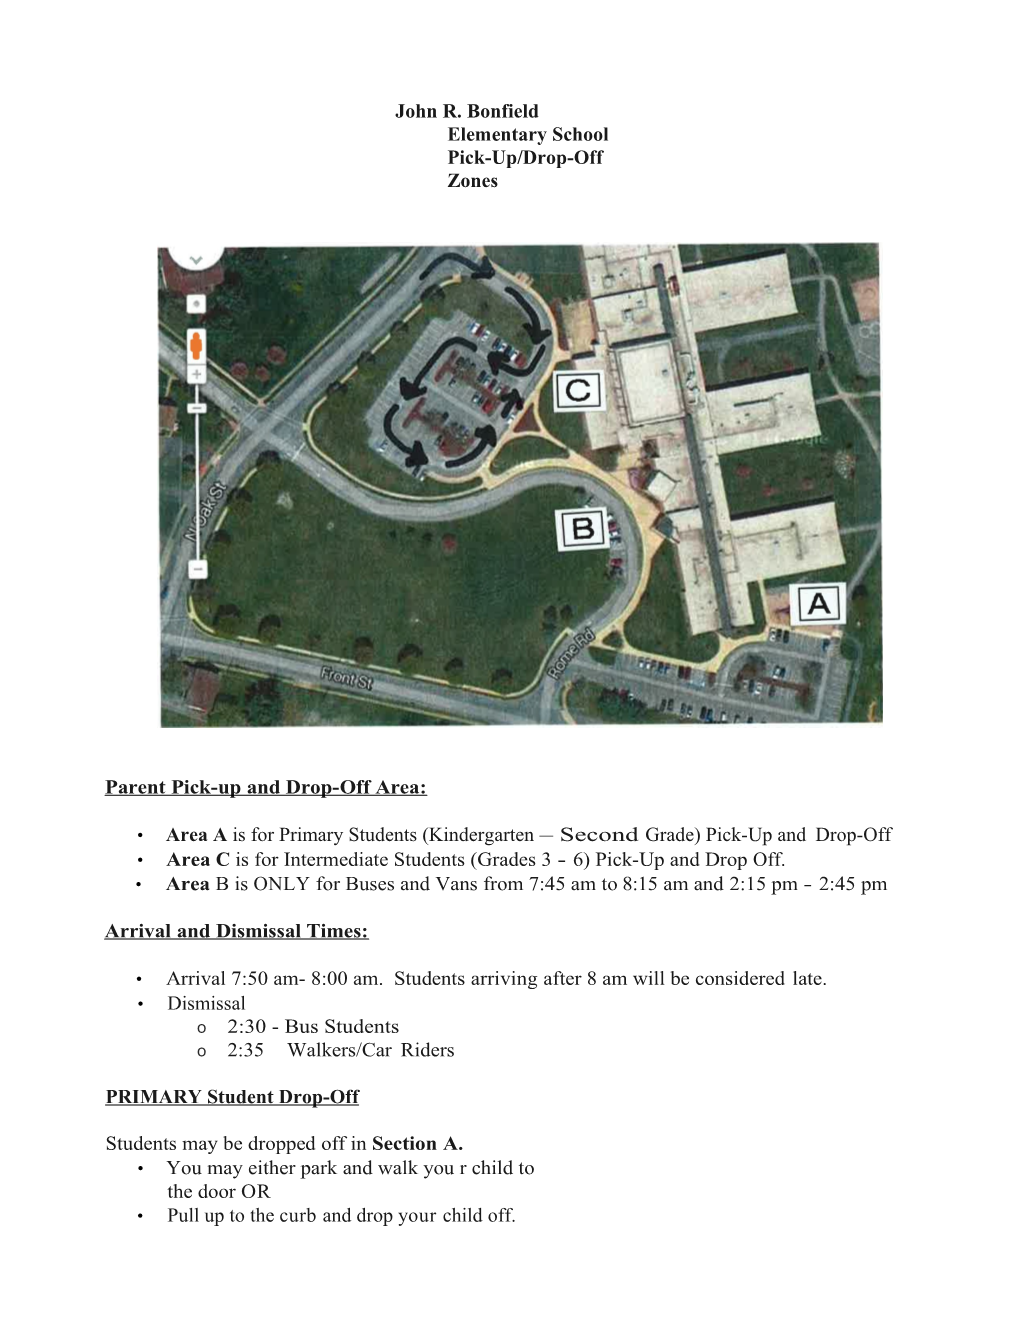 John R. Bonfield Elementary School Pick-Up/Drop-Off Zones